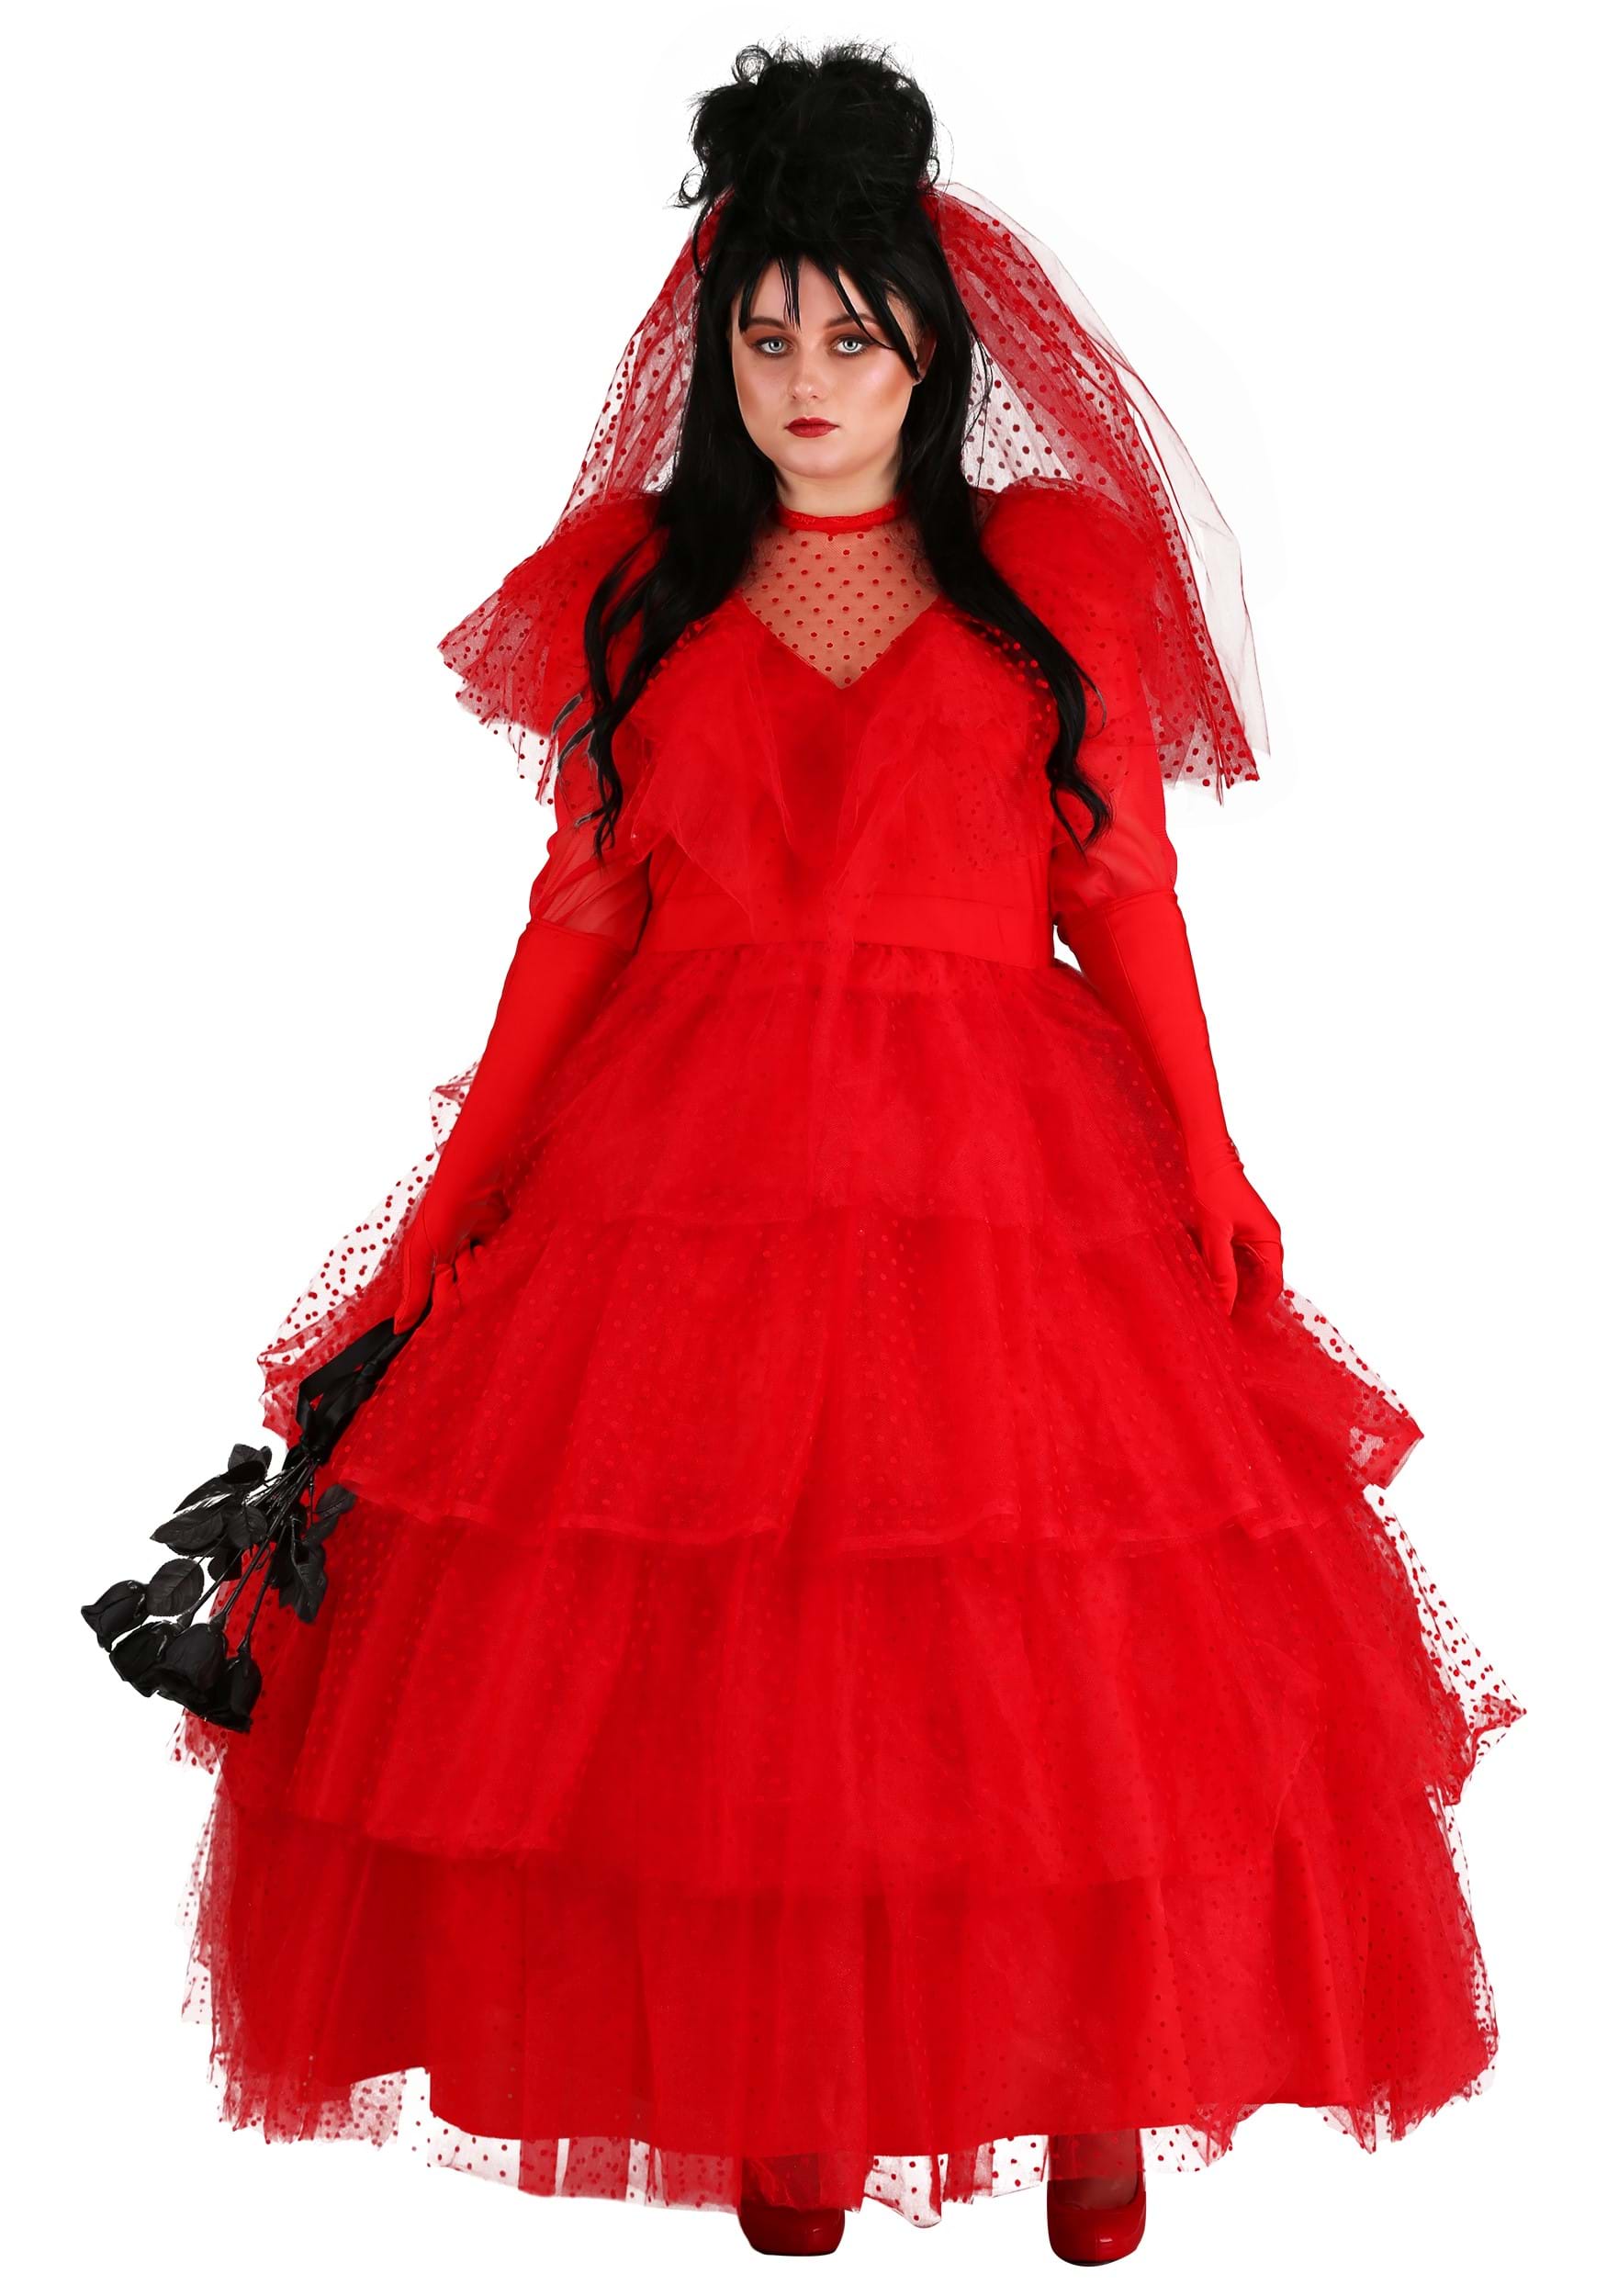 Bold Red Wedding Dresses For the Alternative Bride